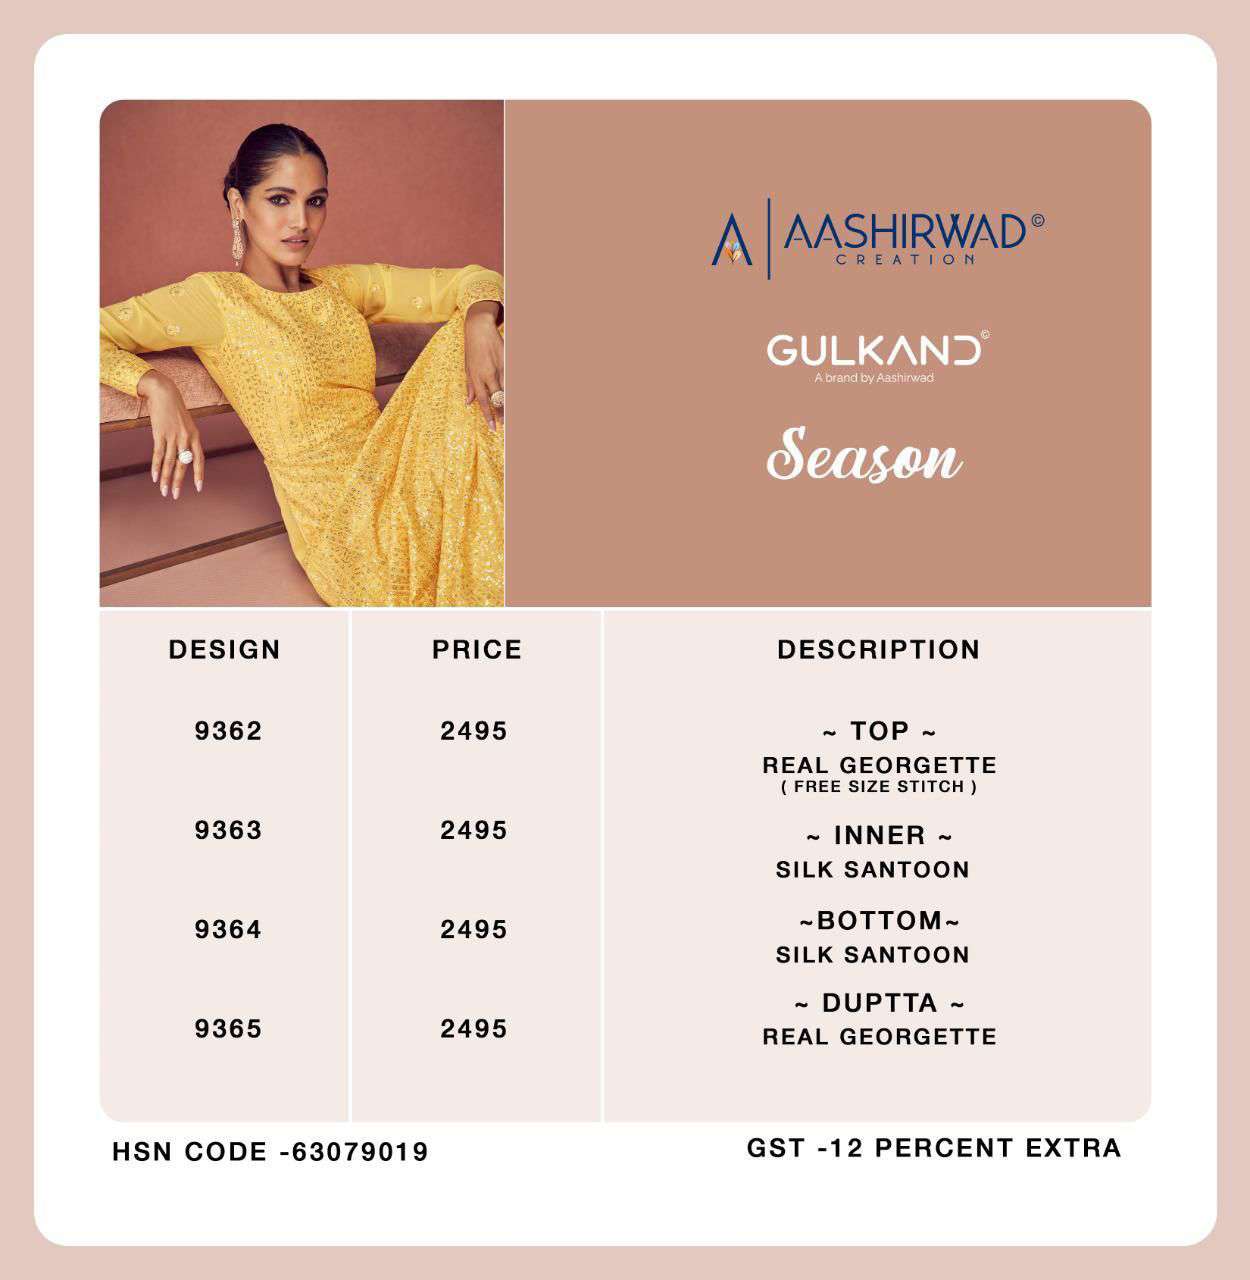 aashirwad creation gulkand seasons 9362-9365 series party wear look collection wholesale price surat